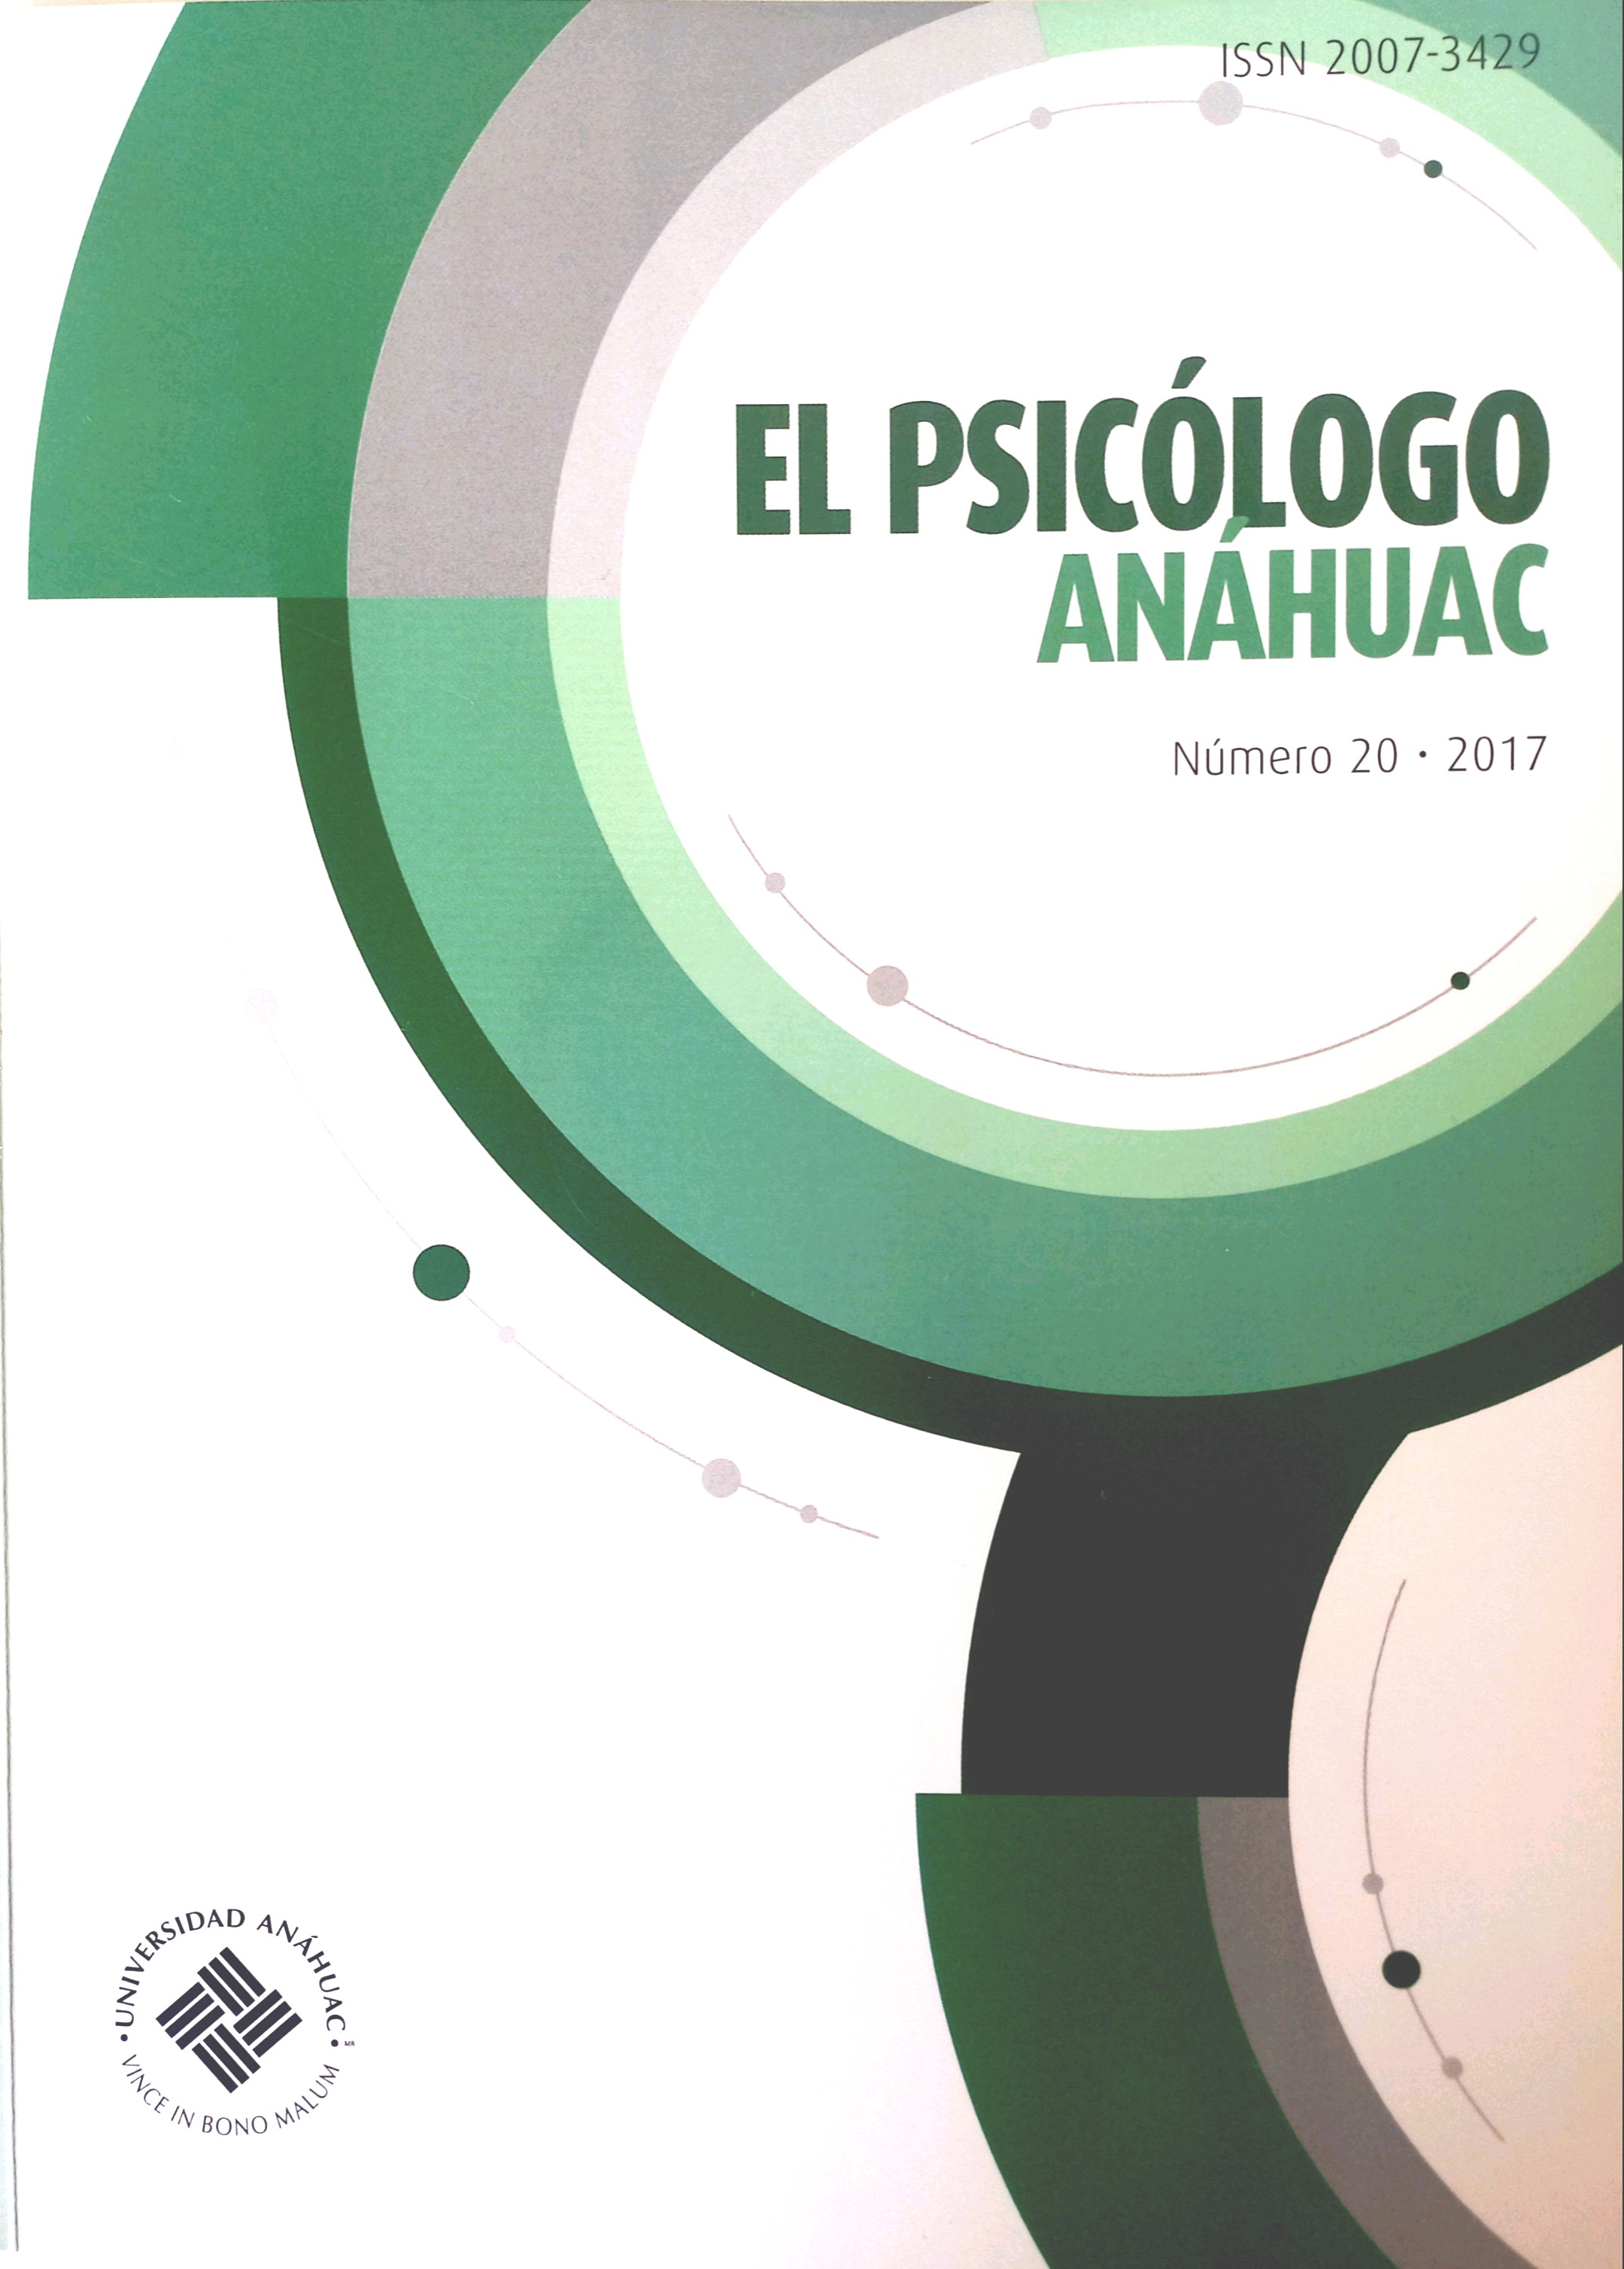 					Ver Vol. 20 Núm. 20 (2017): El Psicólogo Anáhuac, Vol. 20
				